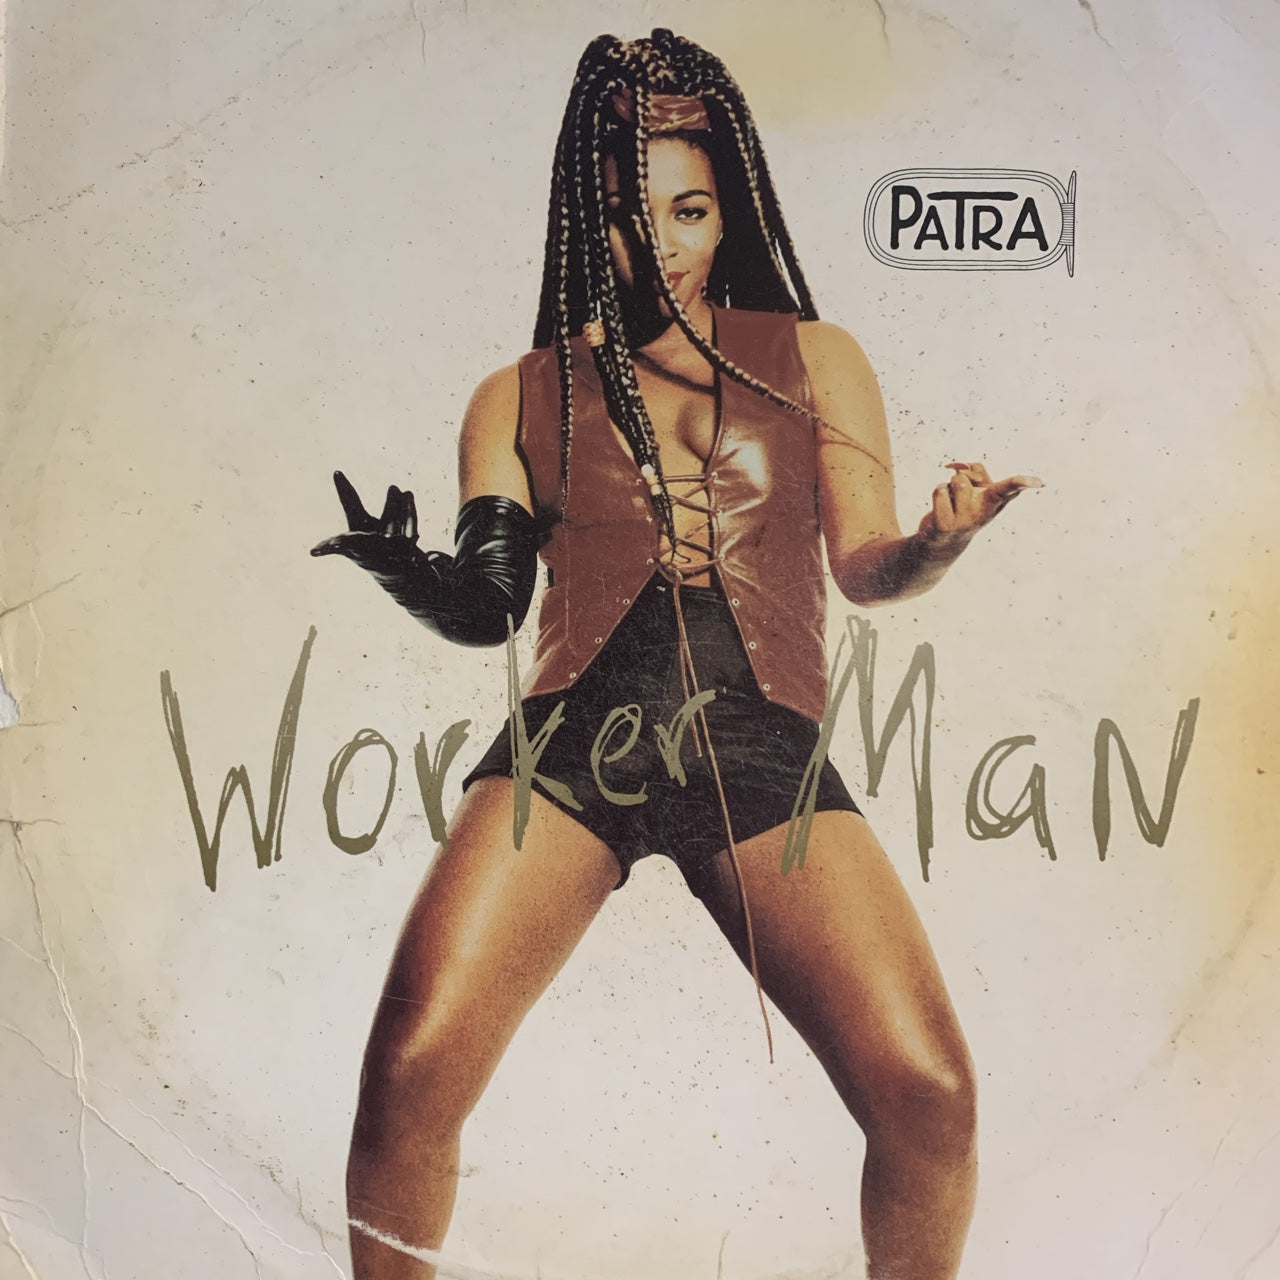 Patra “Worker Man” 6 Version 12inch Vinyl Single